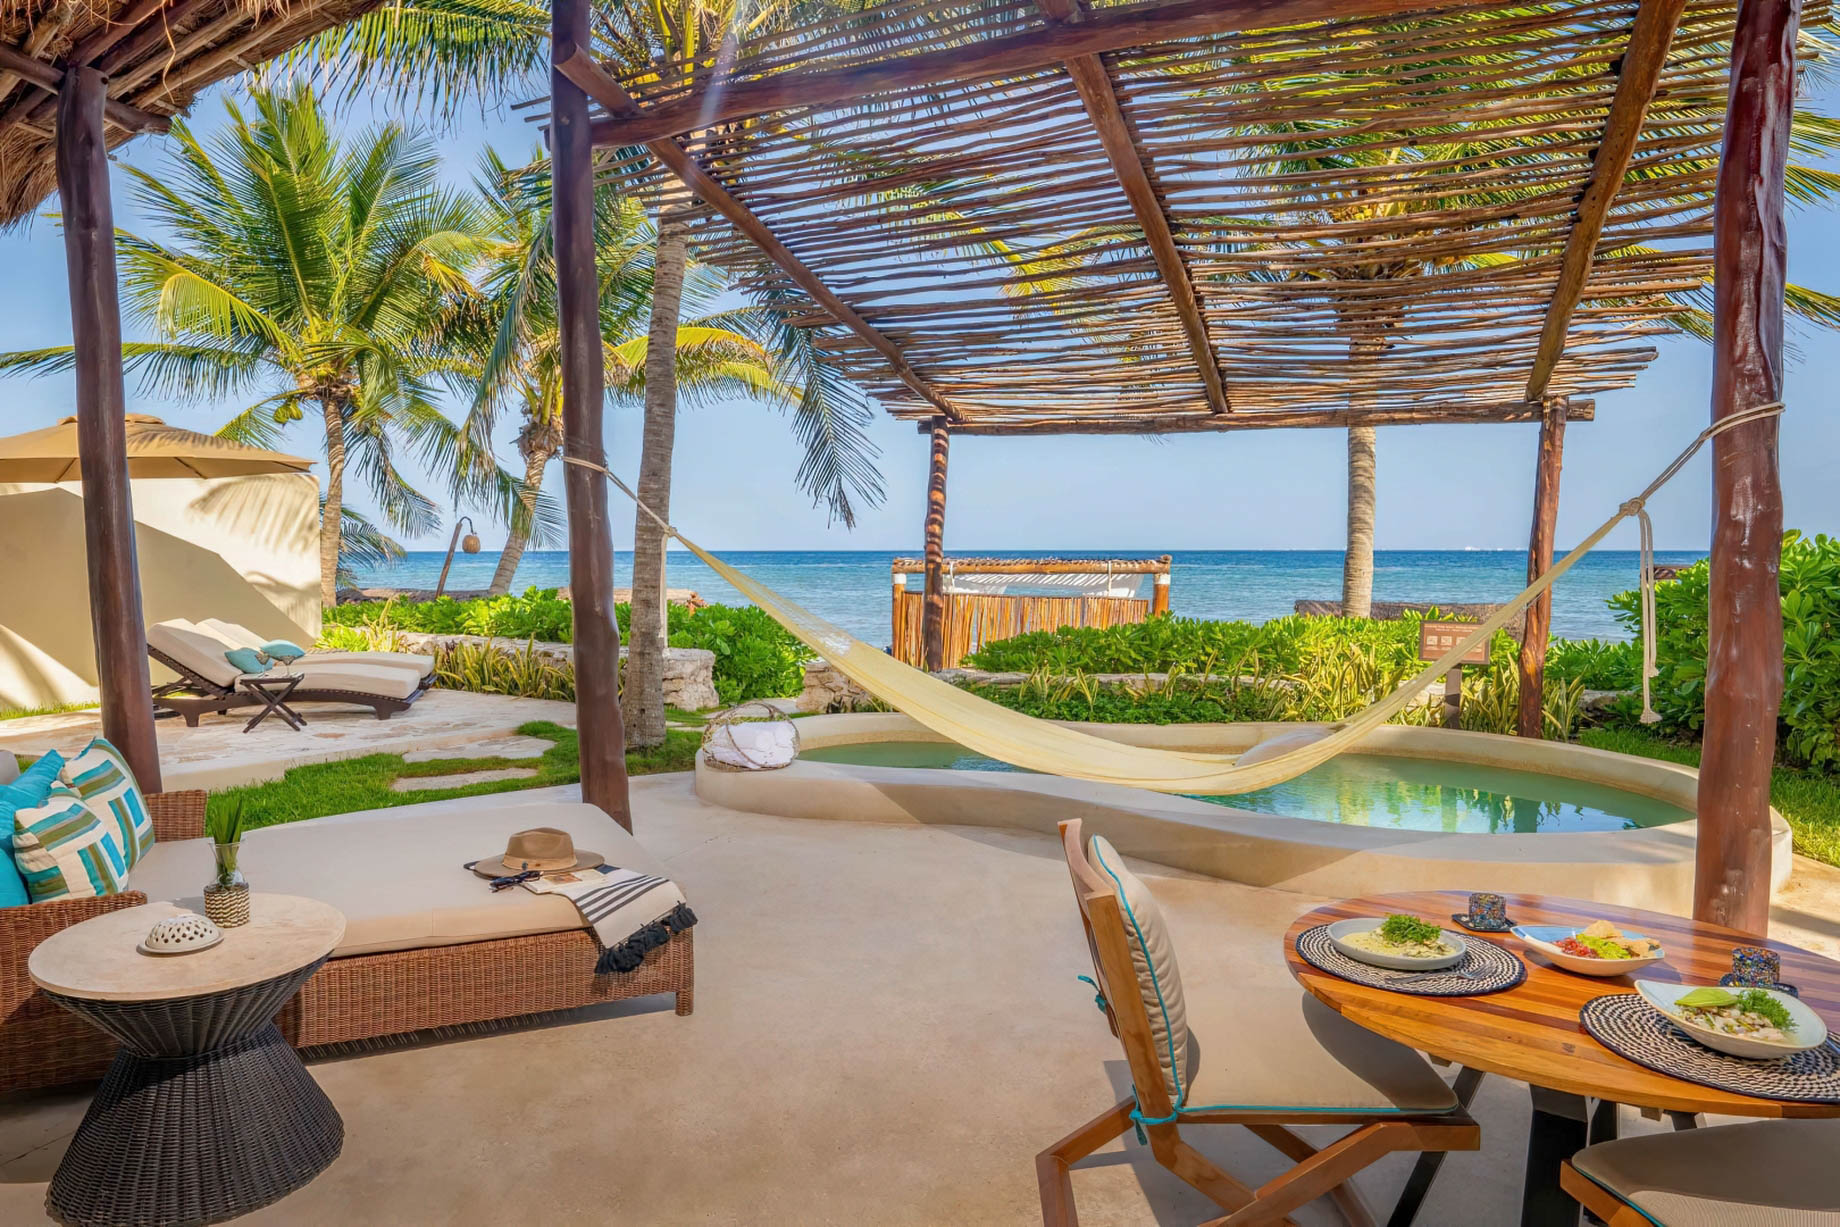 Viceroy Riviera Maya Resort - Playa del Carmen, Mexico - Beachfront Villa Deck